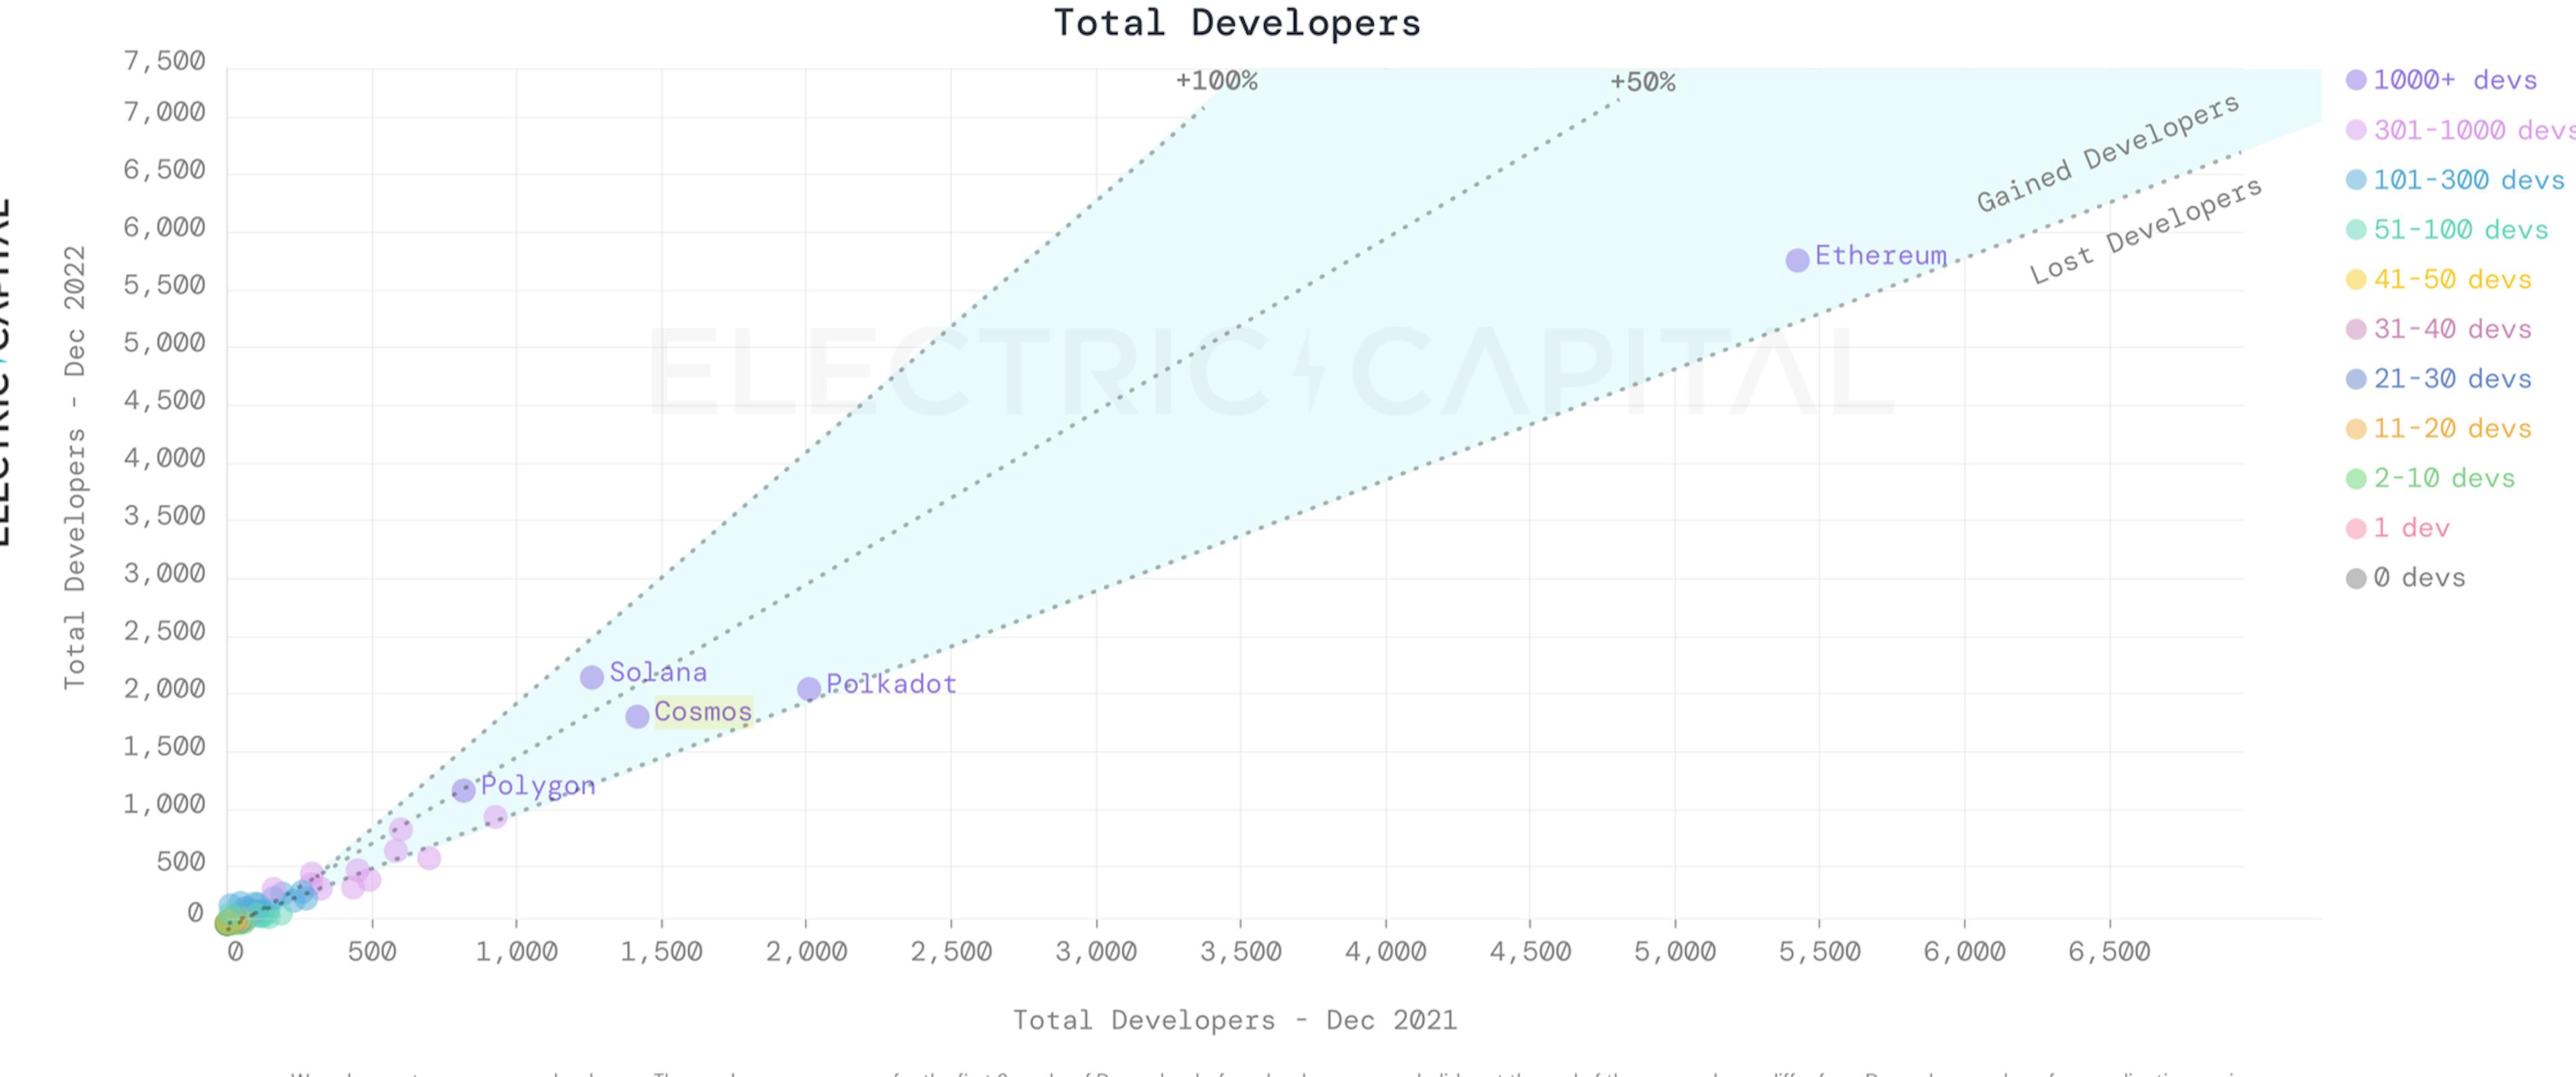 Total Developers